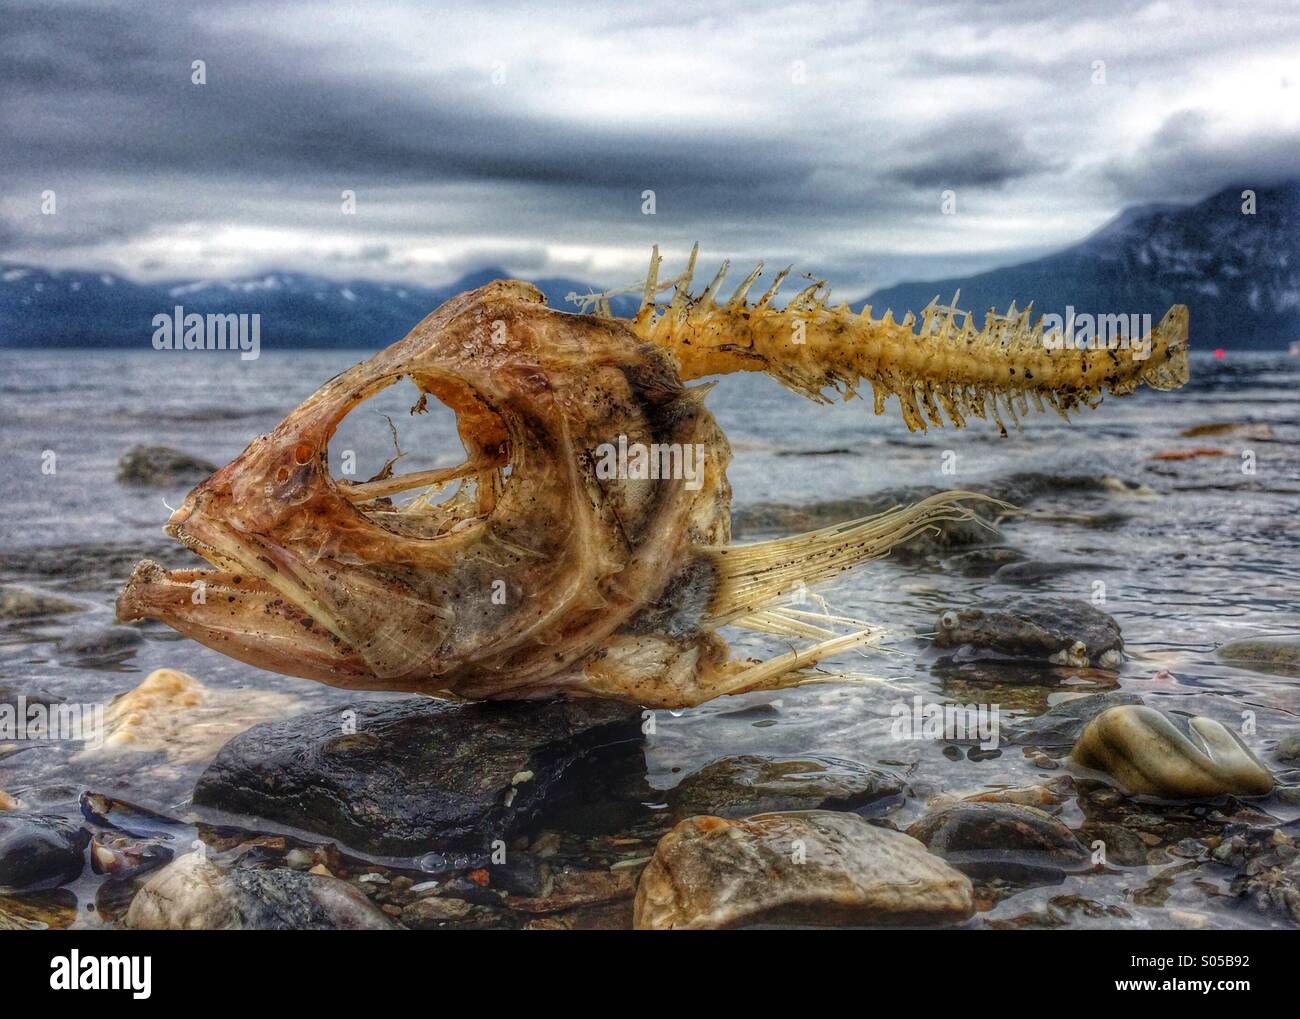 Drama on the beach. Coalfish carcass washed ashore on Nordic beach, Norway. Stock Photo